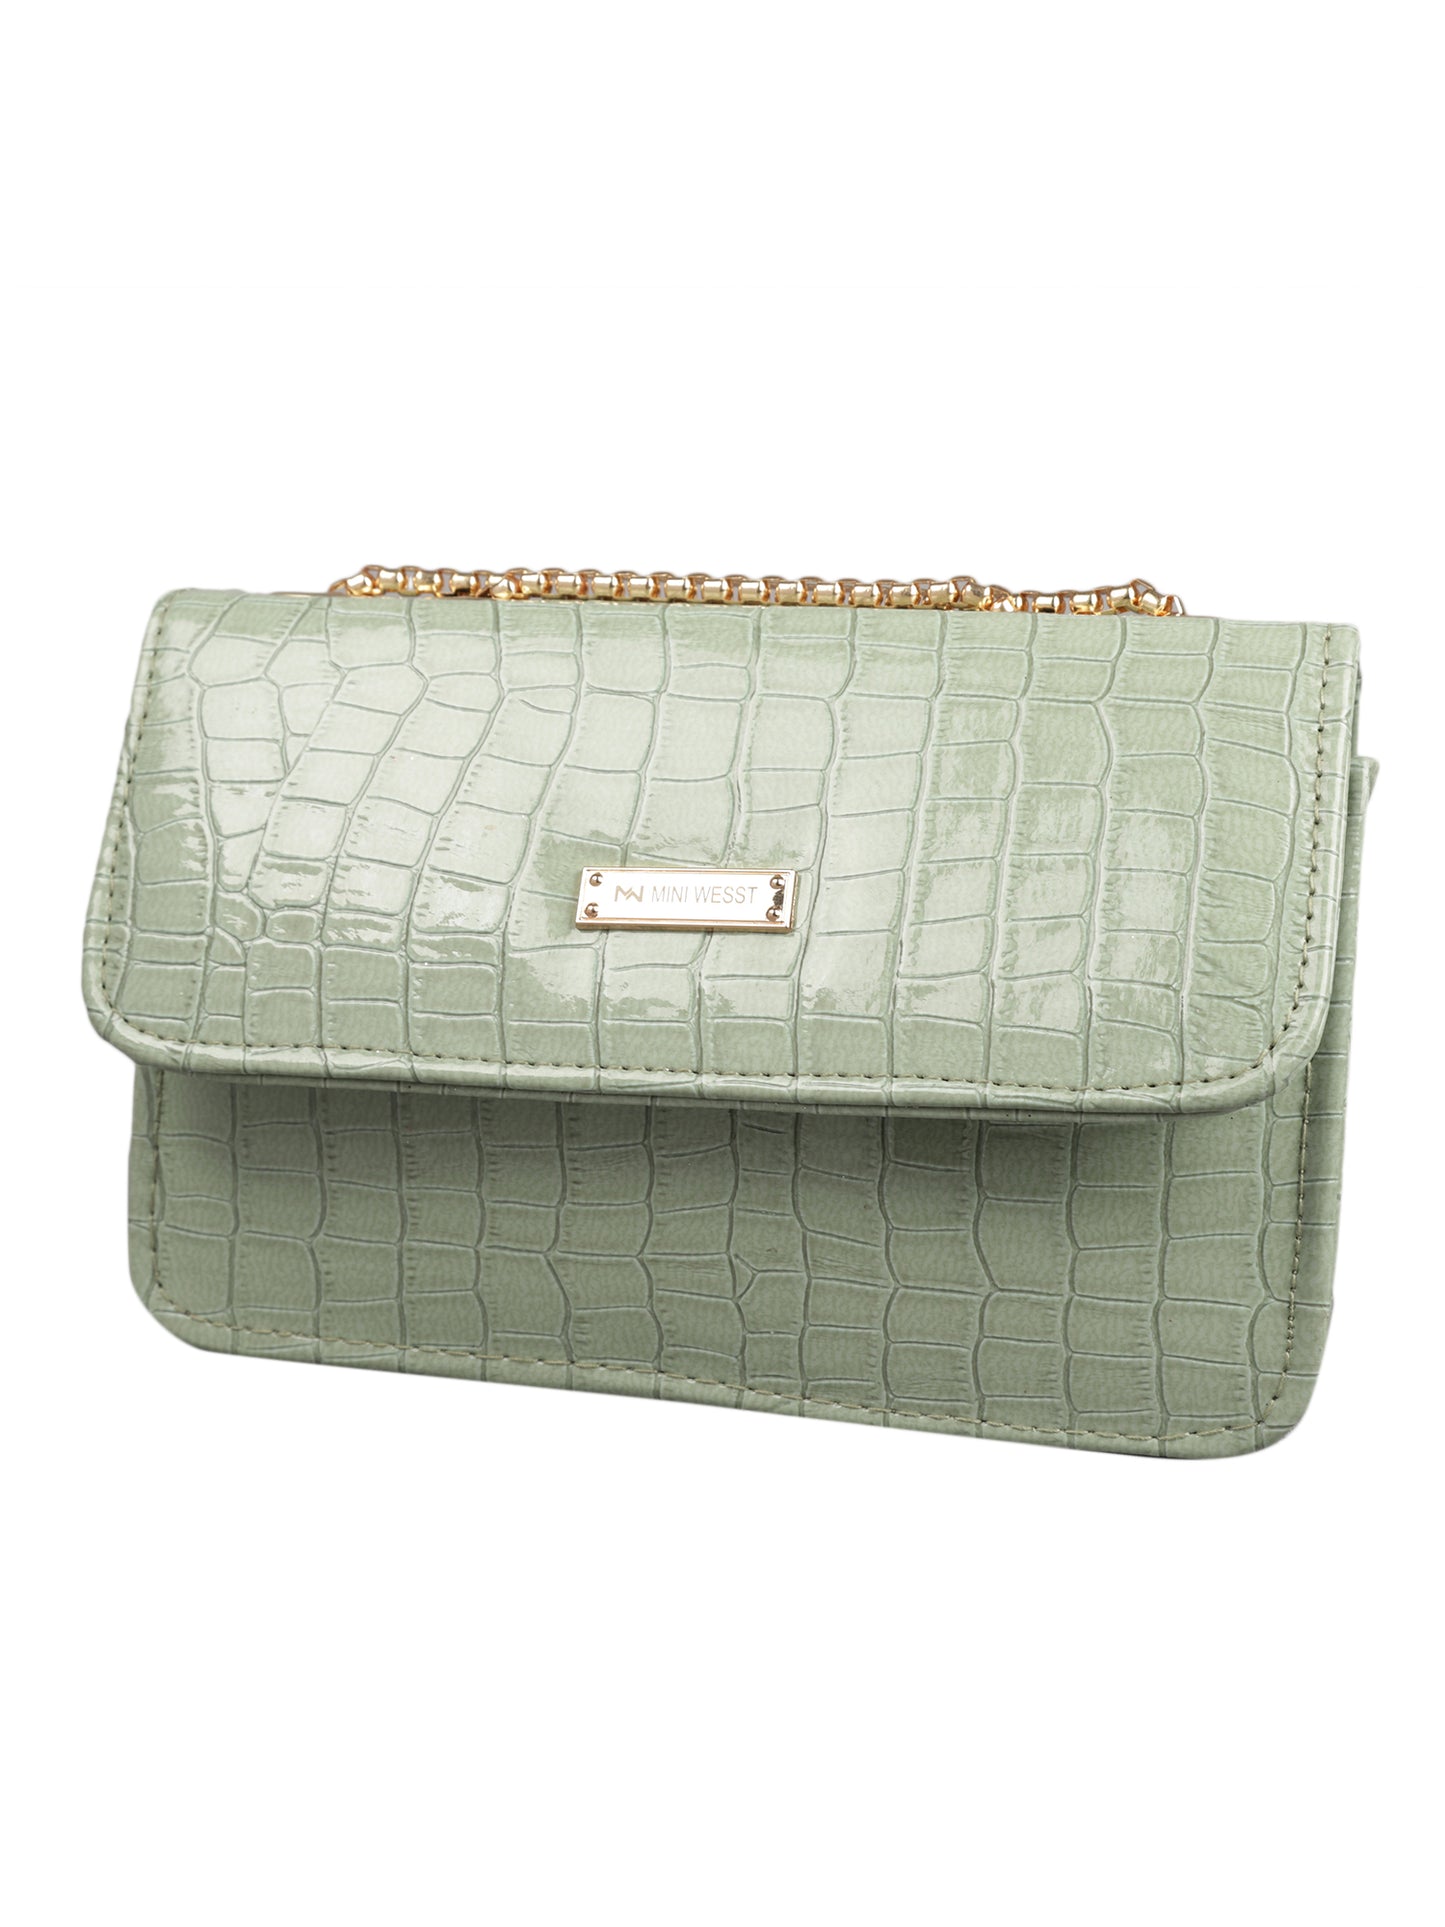 MINI WESST Women's Green Handbags(MWHB014GR)